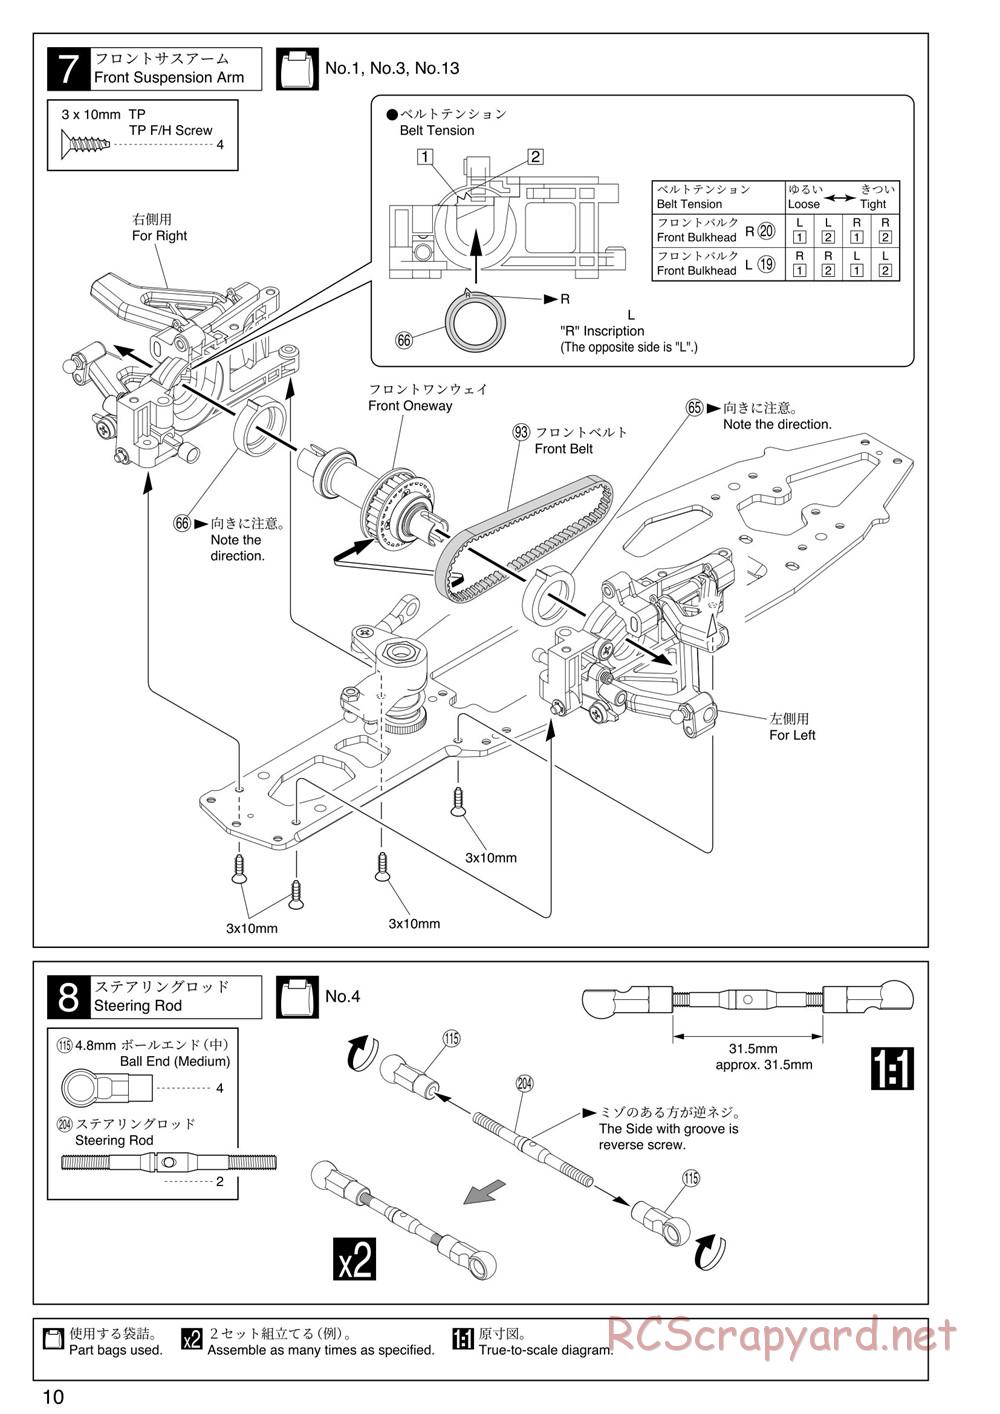 Kyosho - V-One RRR Evo - Manual - Page 10